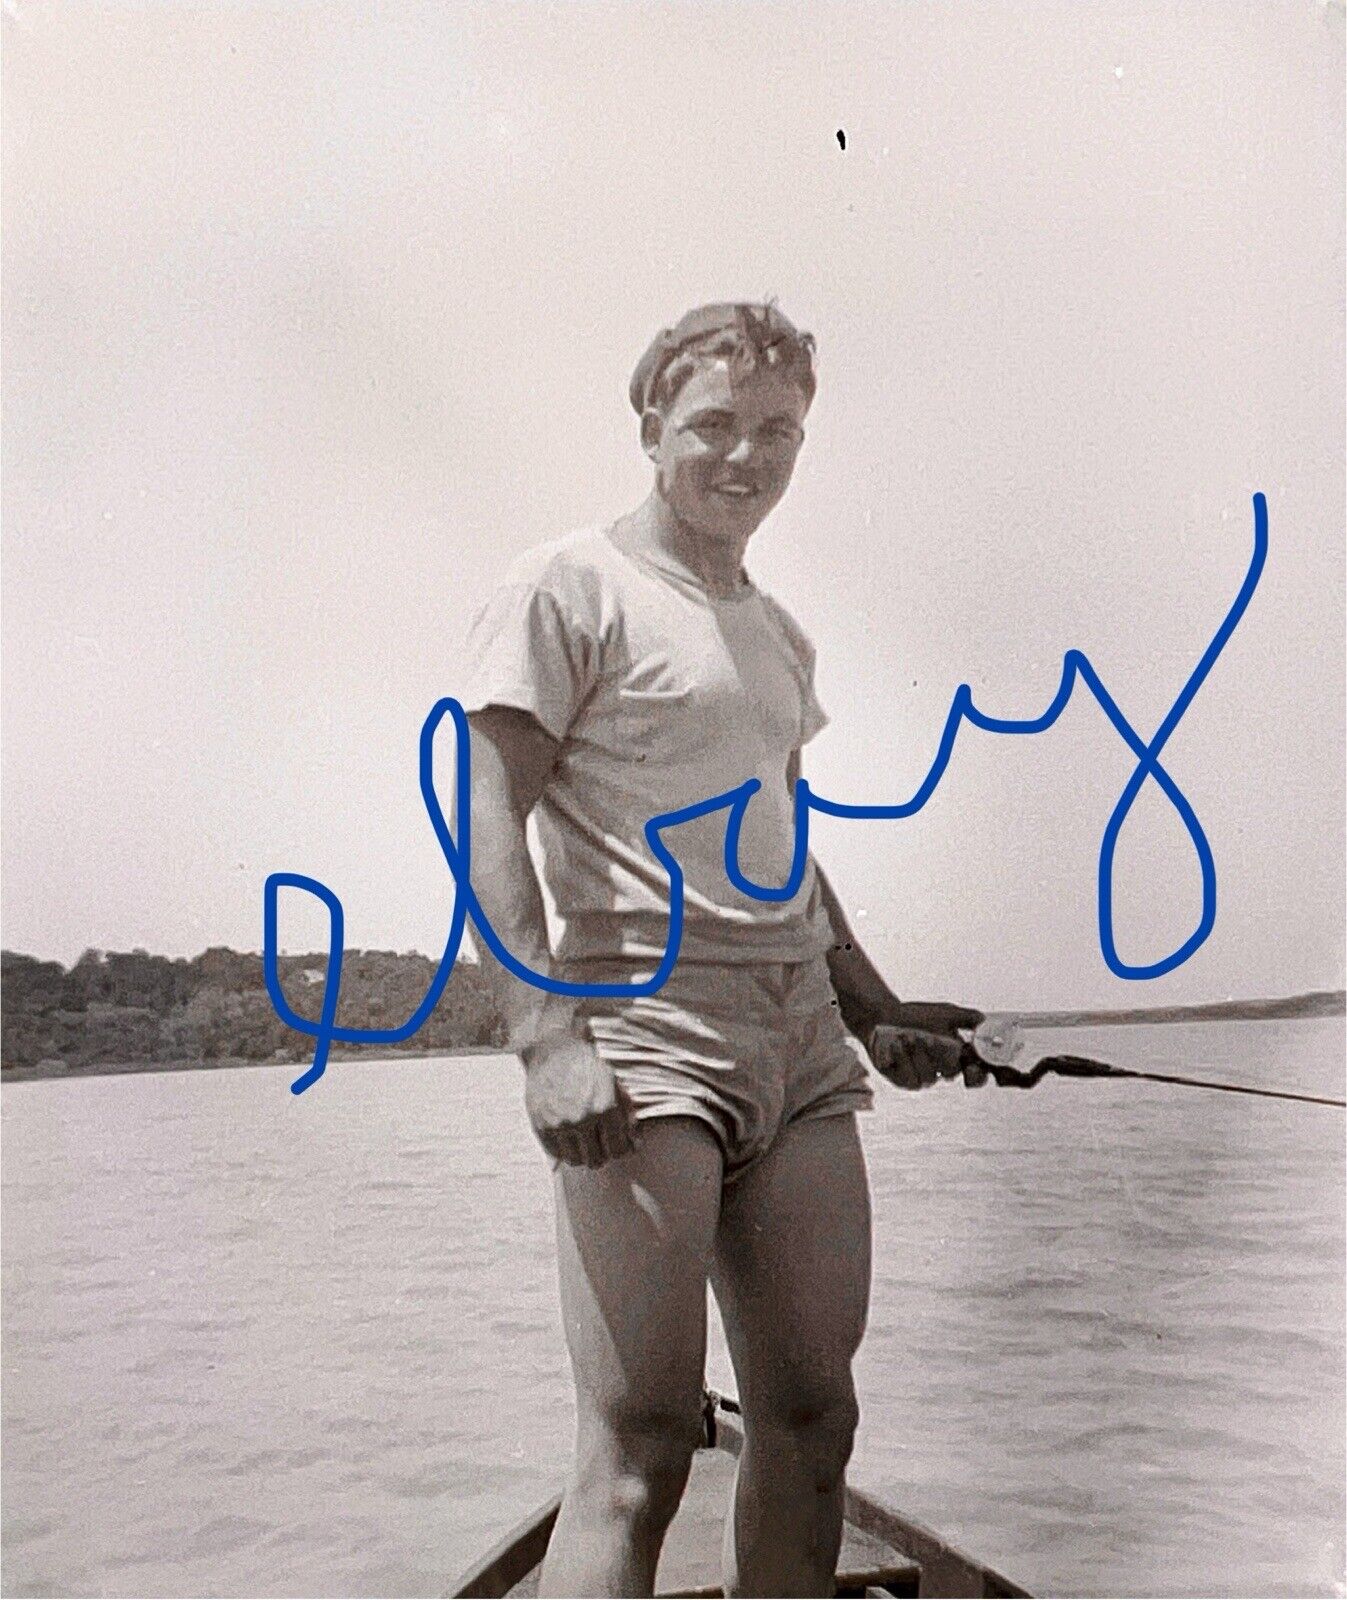 VTG 1940s Negatives Muscular Texas Man in Shorts Rowing Fishing Gay Interest